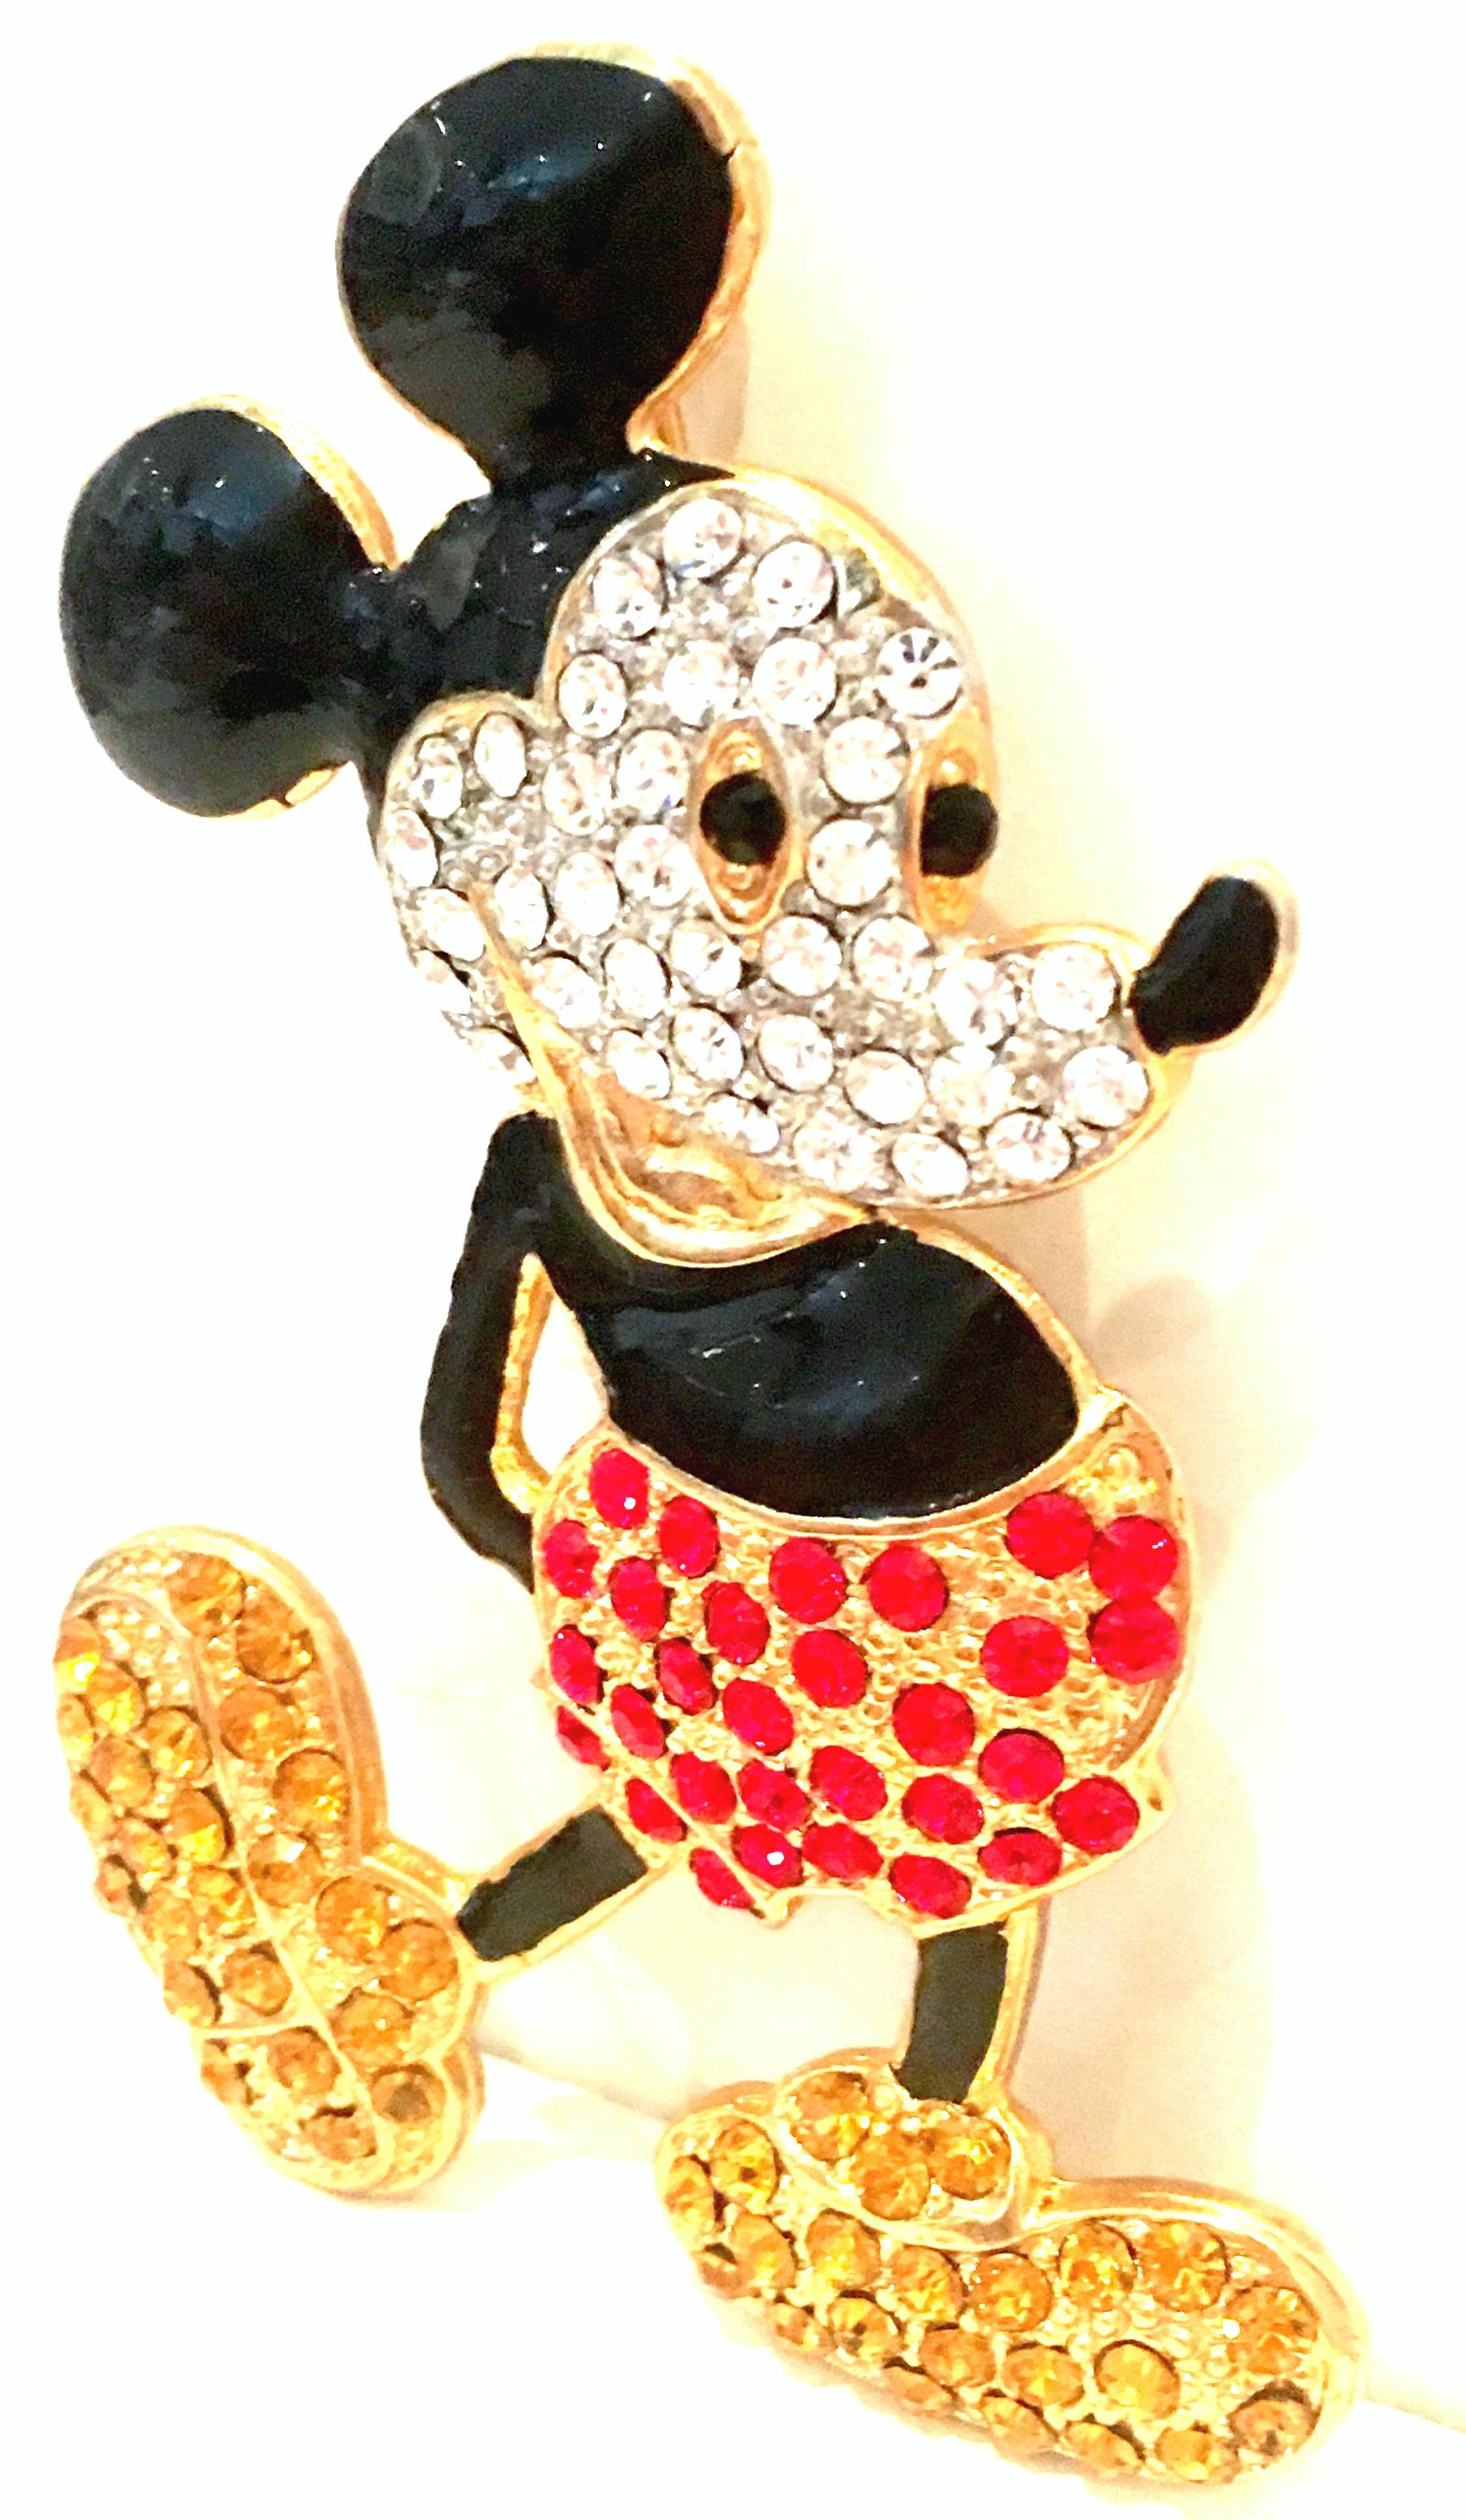 the dream jeweled mickey